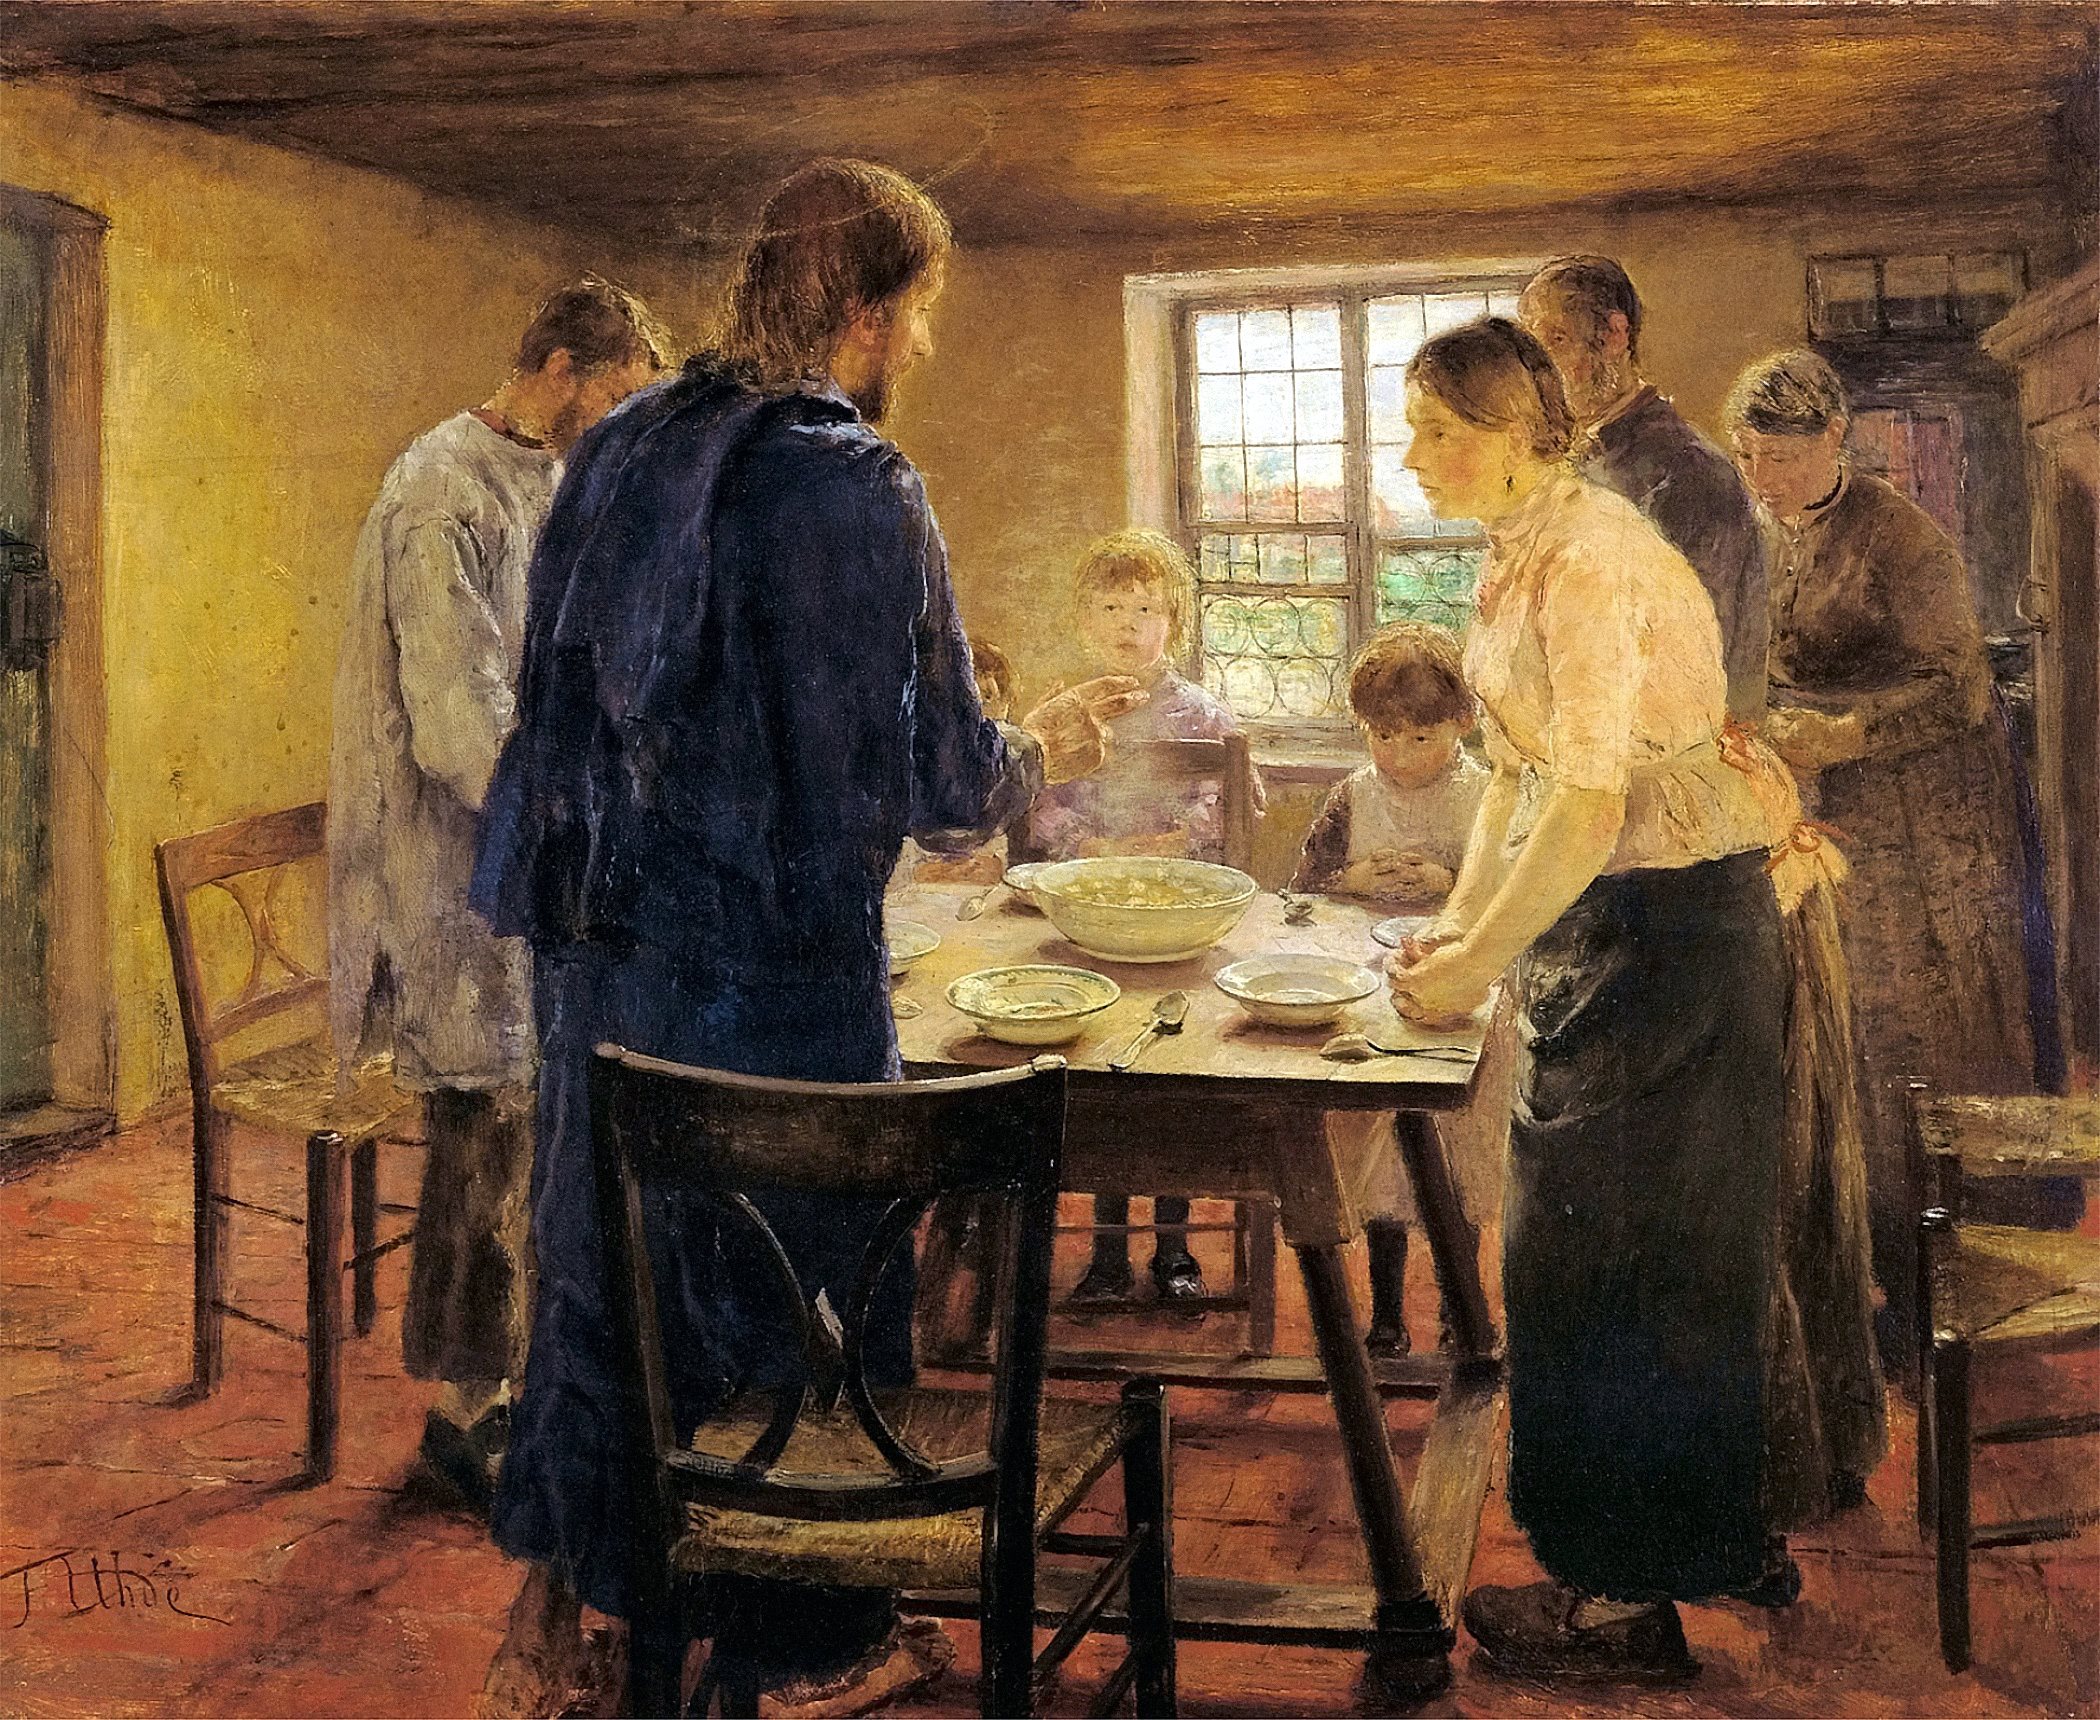 00 Fritz von Uhde. Christ with the Peasants. 1888